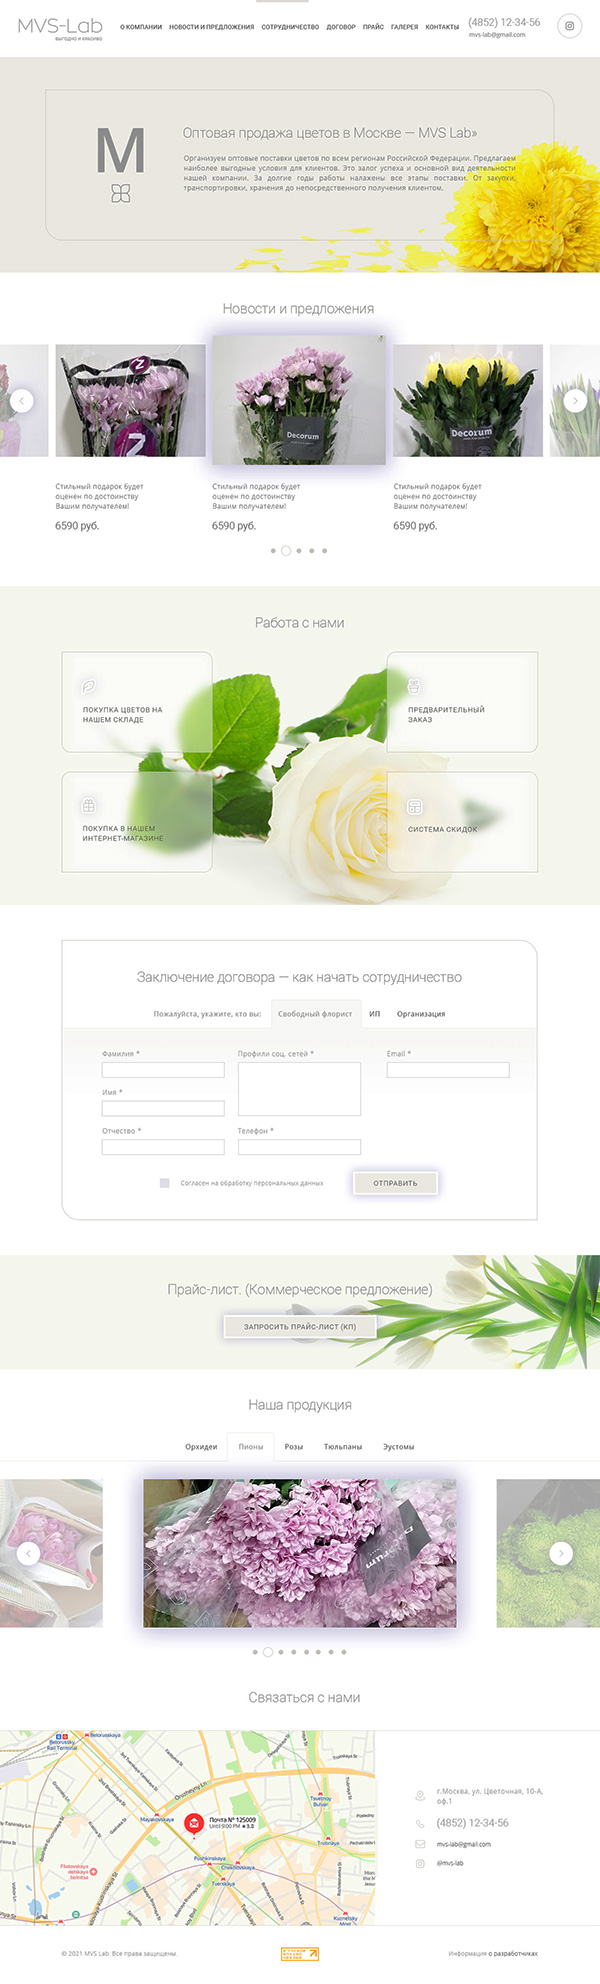 Сайт MVS-Lab - оптовая продажа цветов